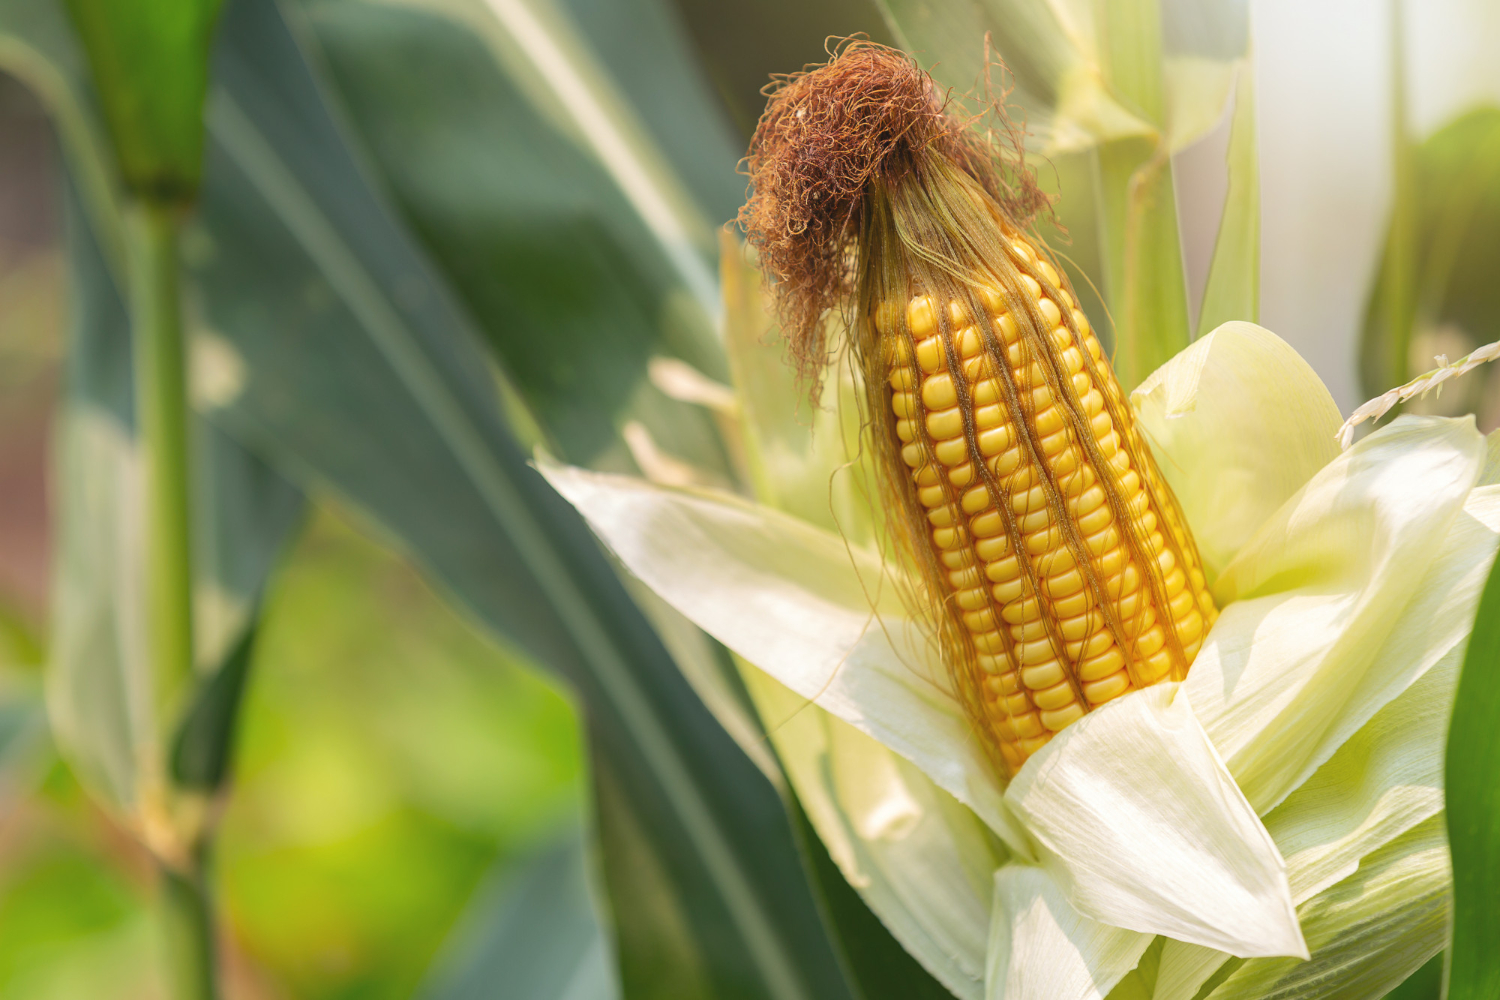 maize insights